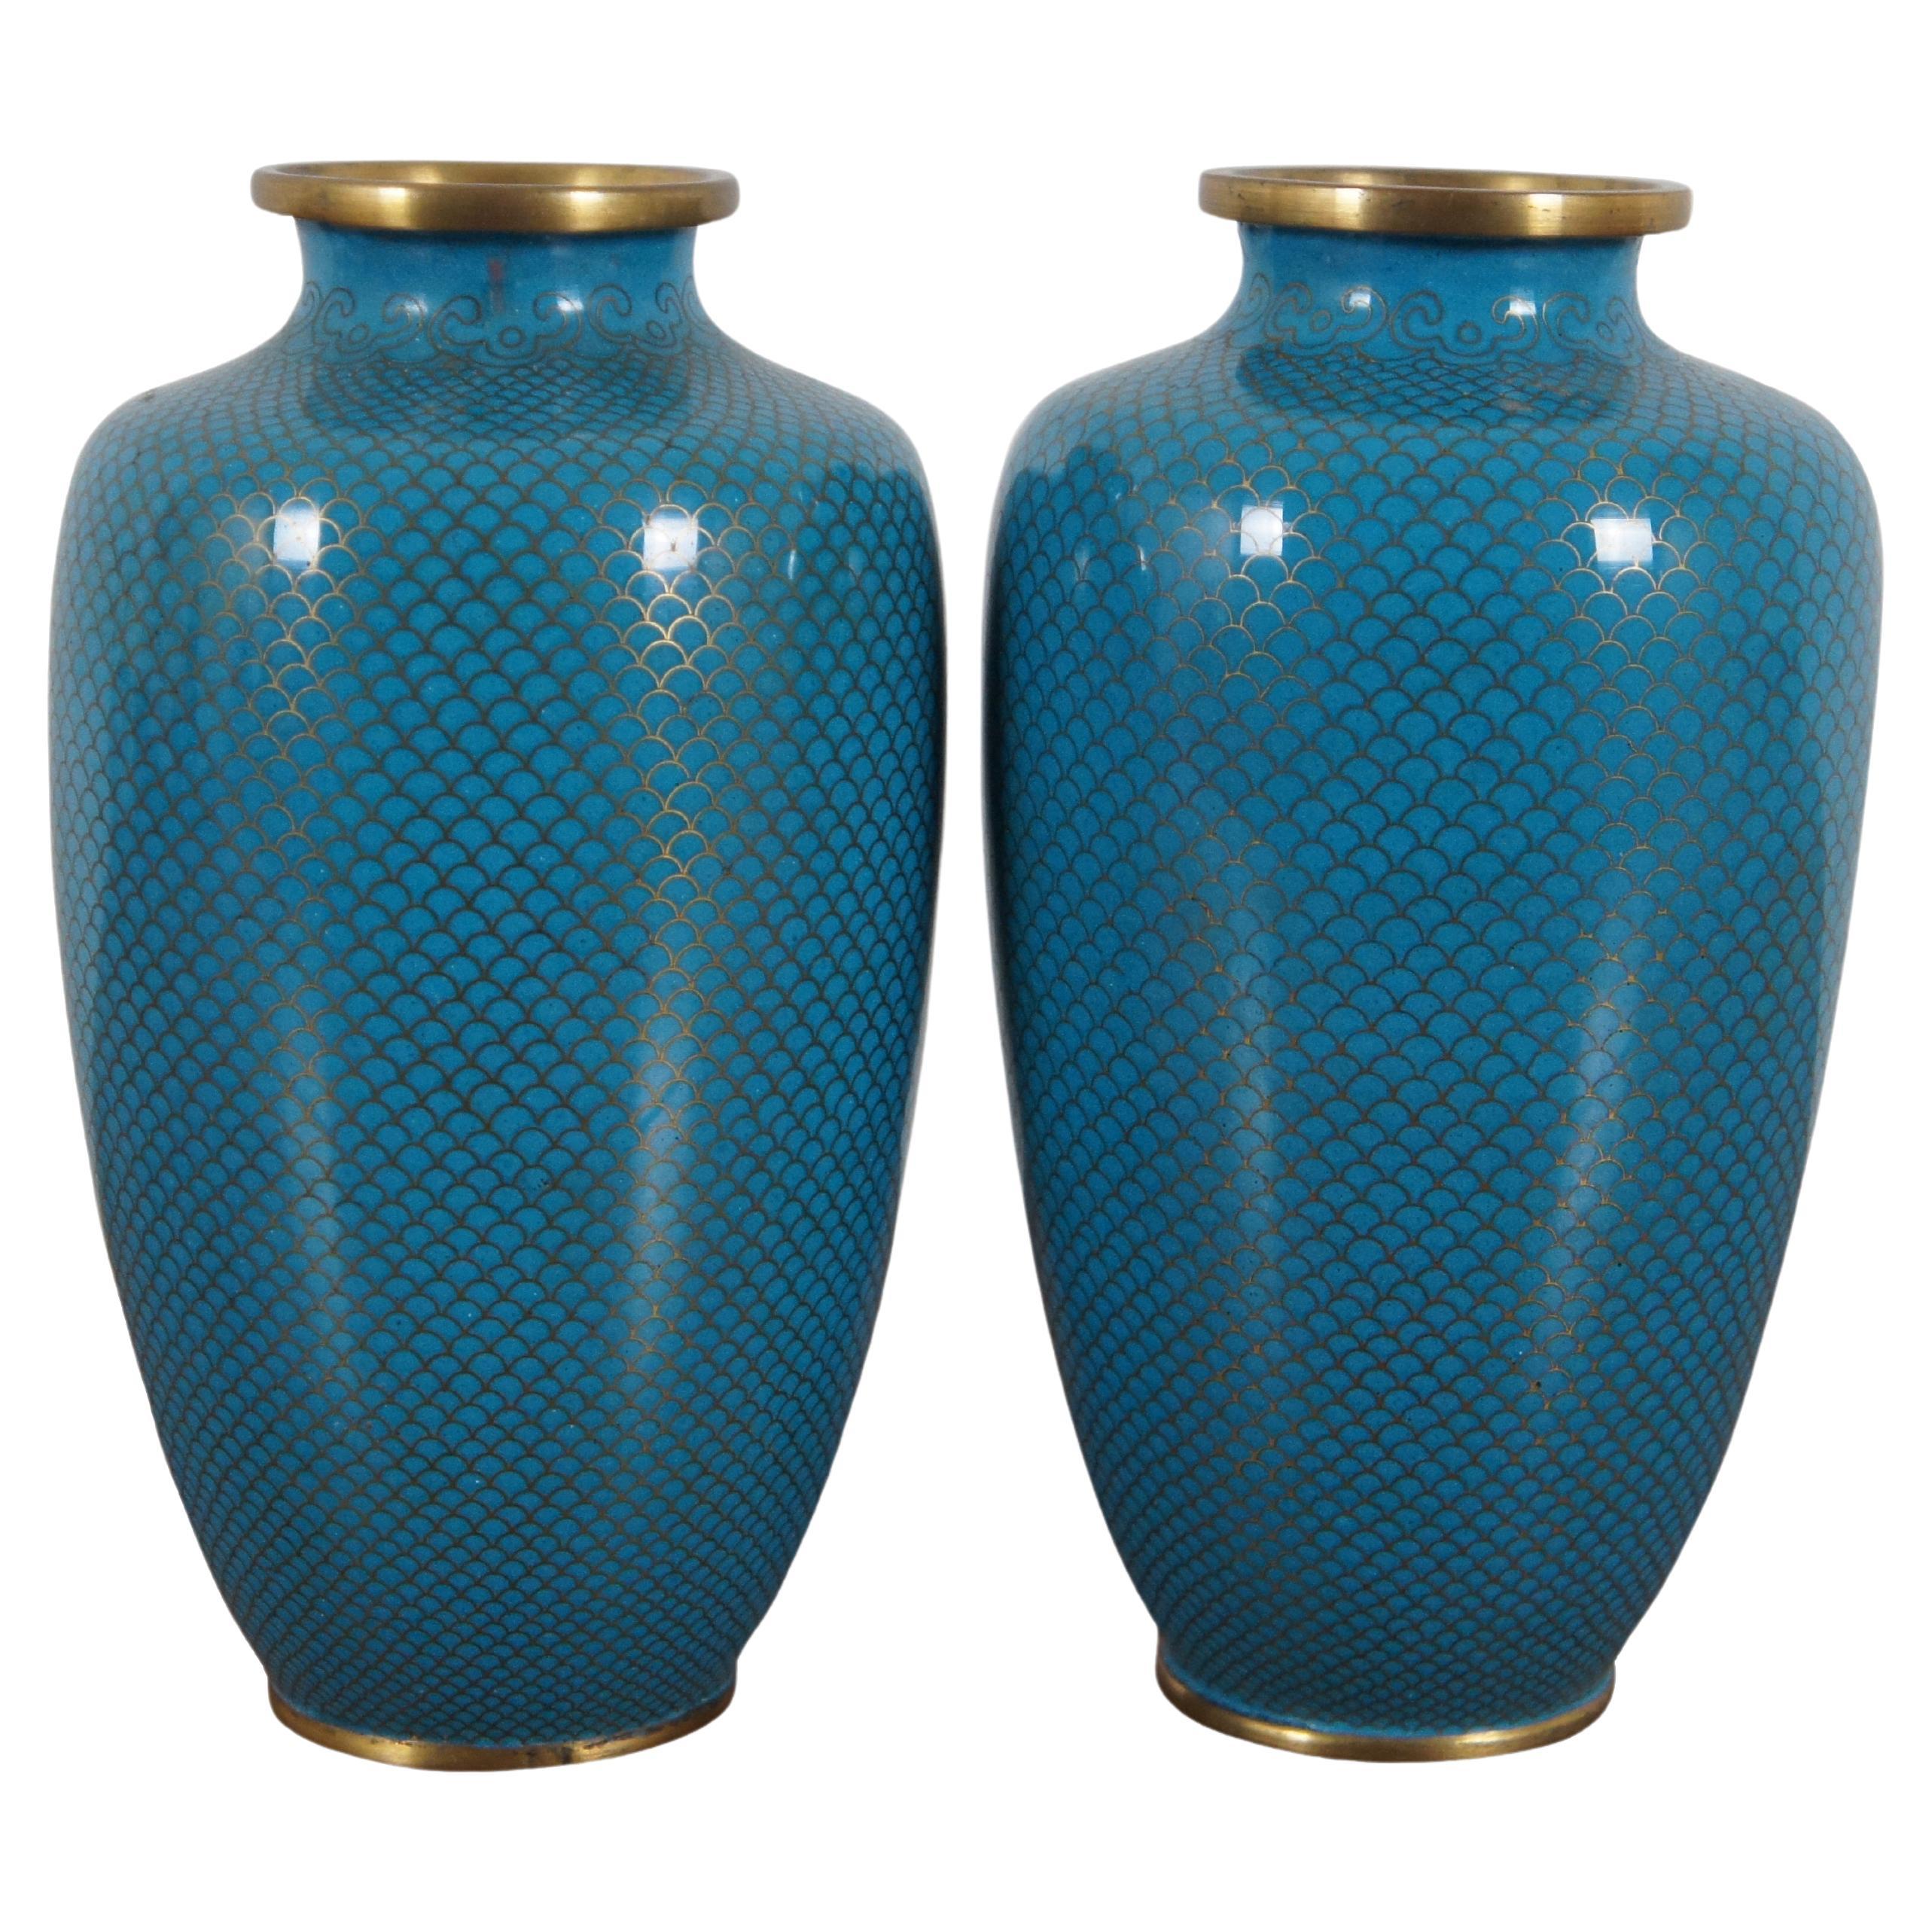 2 Antique Chinese Turquoise Blue Enameled Fish Scale Cloisonne Vases Urns 7.5"